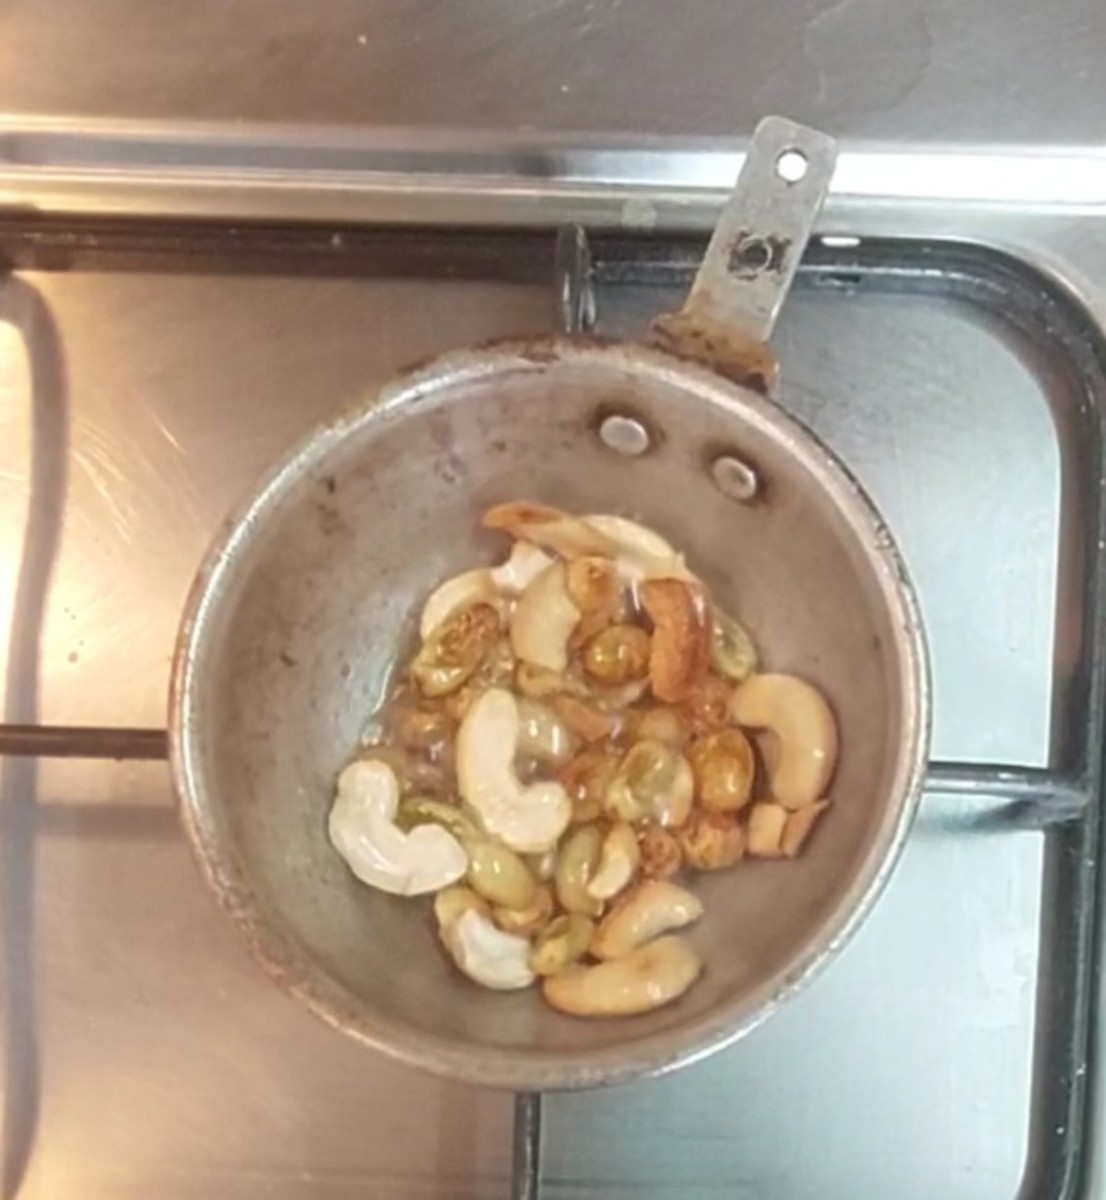 In a frying pan, heat ghee. Add cashews and fry till light golden brown. Add raisins and fry till fluffy. Switch off the flame.